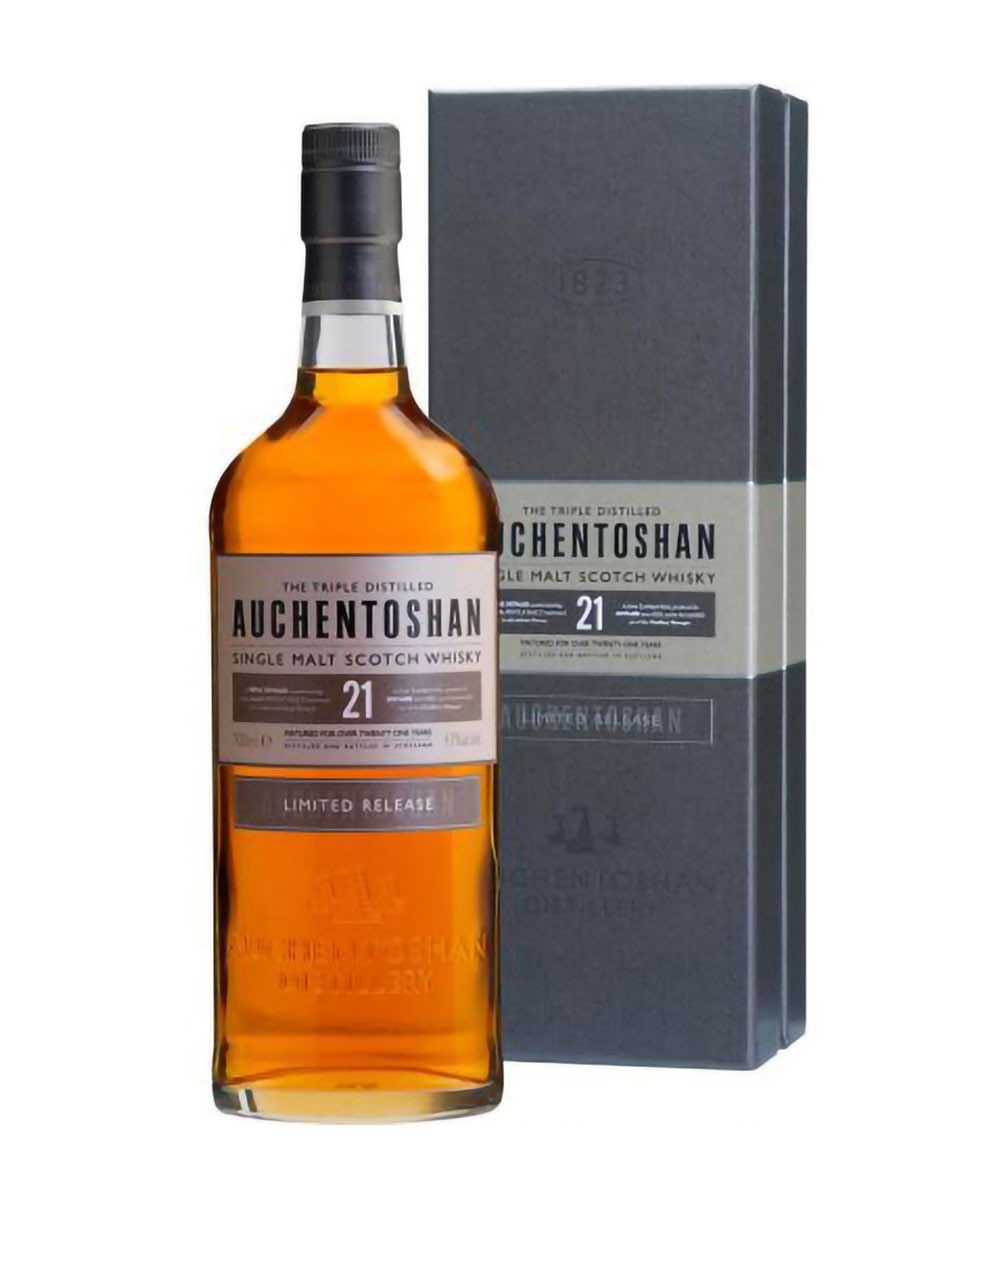 Auchentoshan 21 Year Old Limited Release Single Malt Scotch Whisky